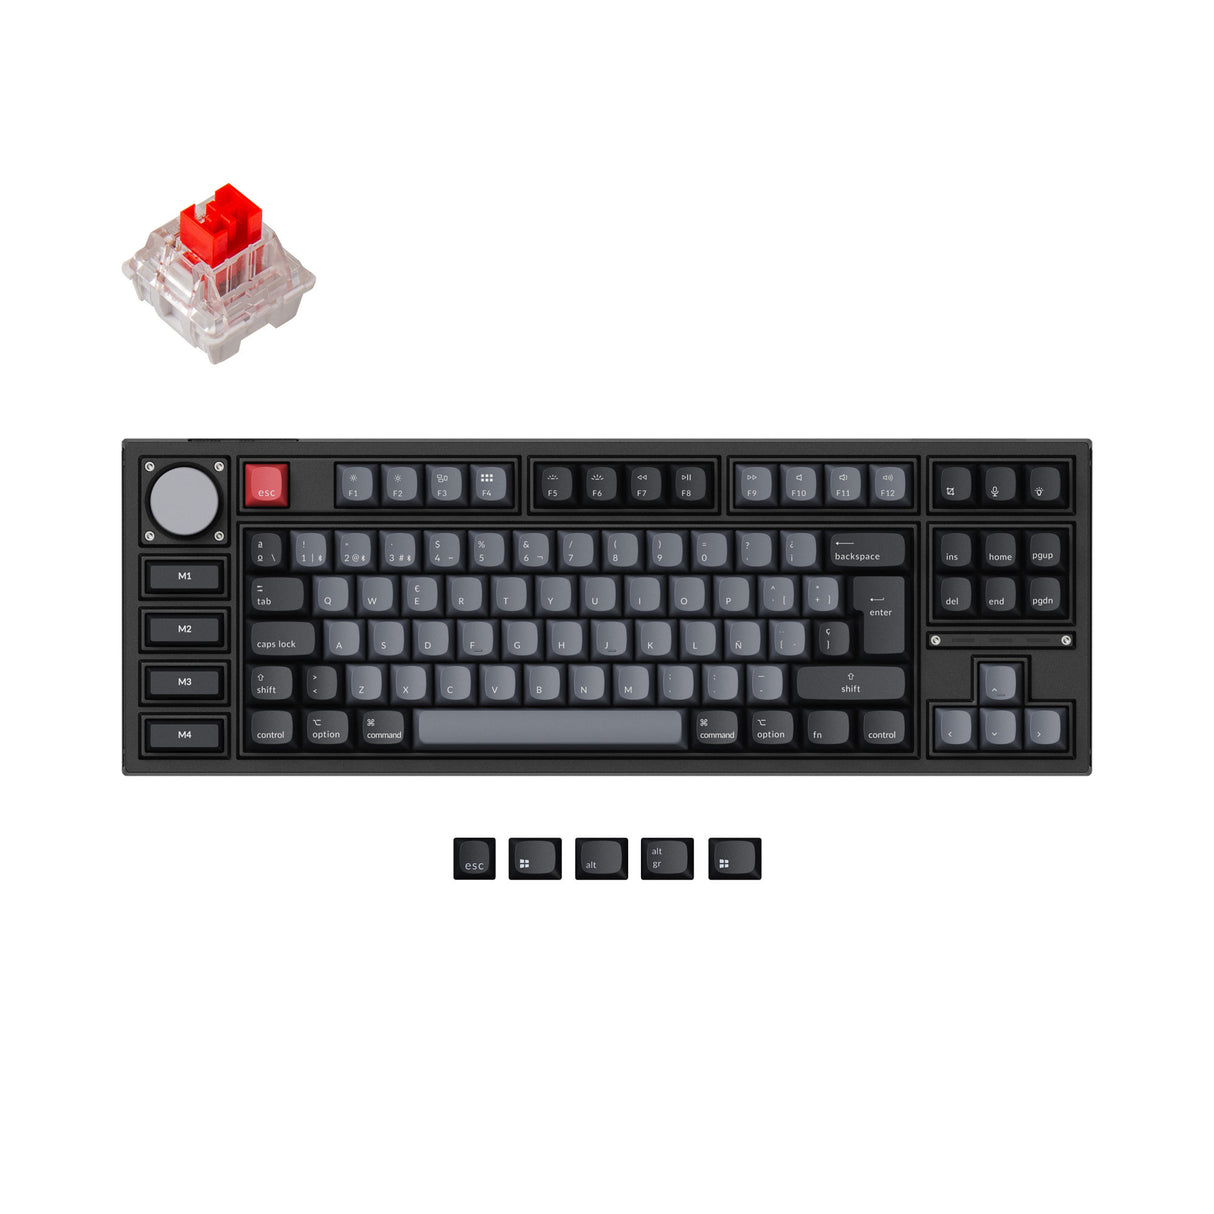 Keychron Q3 Pro QMK/VIA wireless custom mechanical keyboard 80 percent layout aluminum black for Mac WIndows Linux RGB backlight hot-swappable K Pro switch red ISO Spanish layout